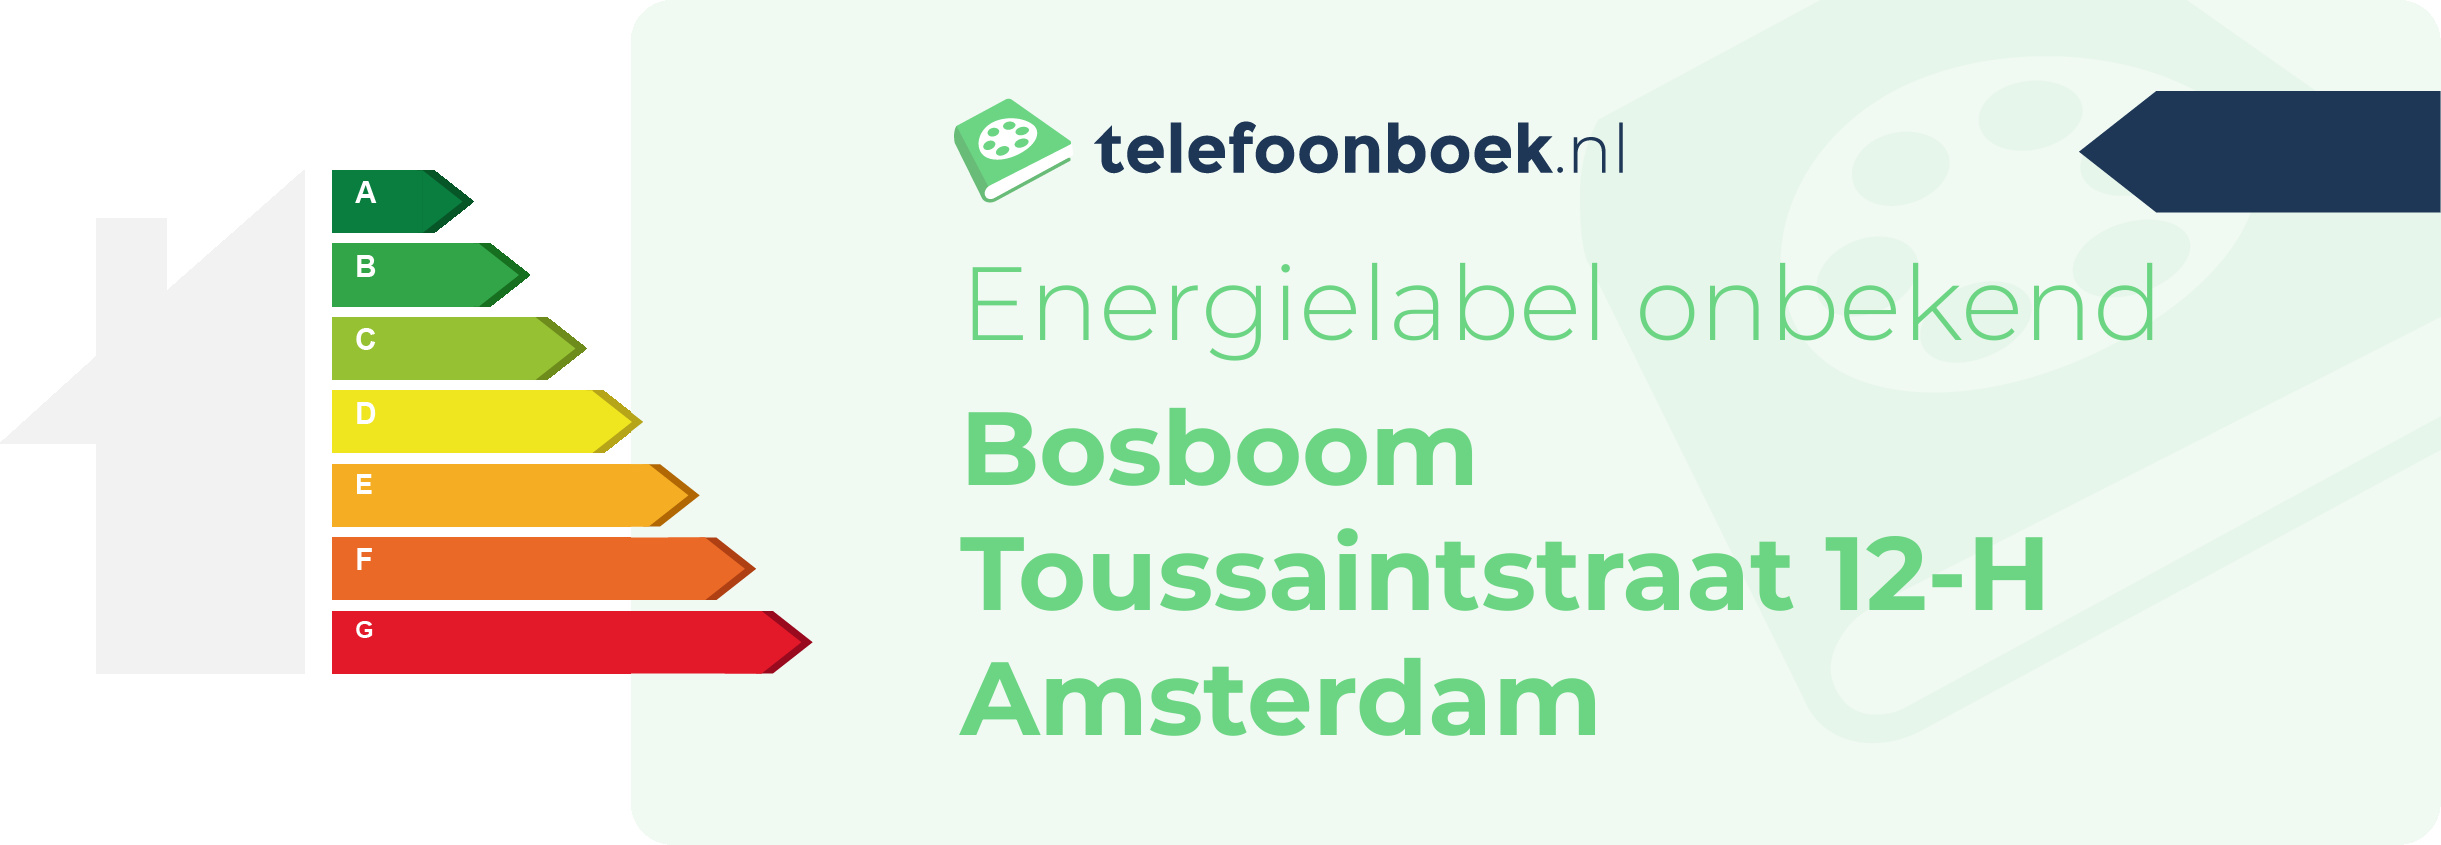 Energielabel Bosboom Toussaintstraat 12-H Amsterdam